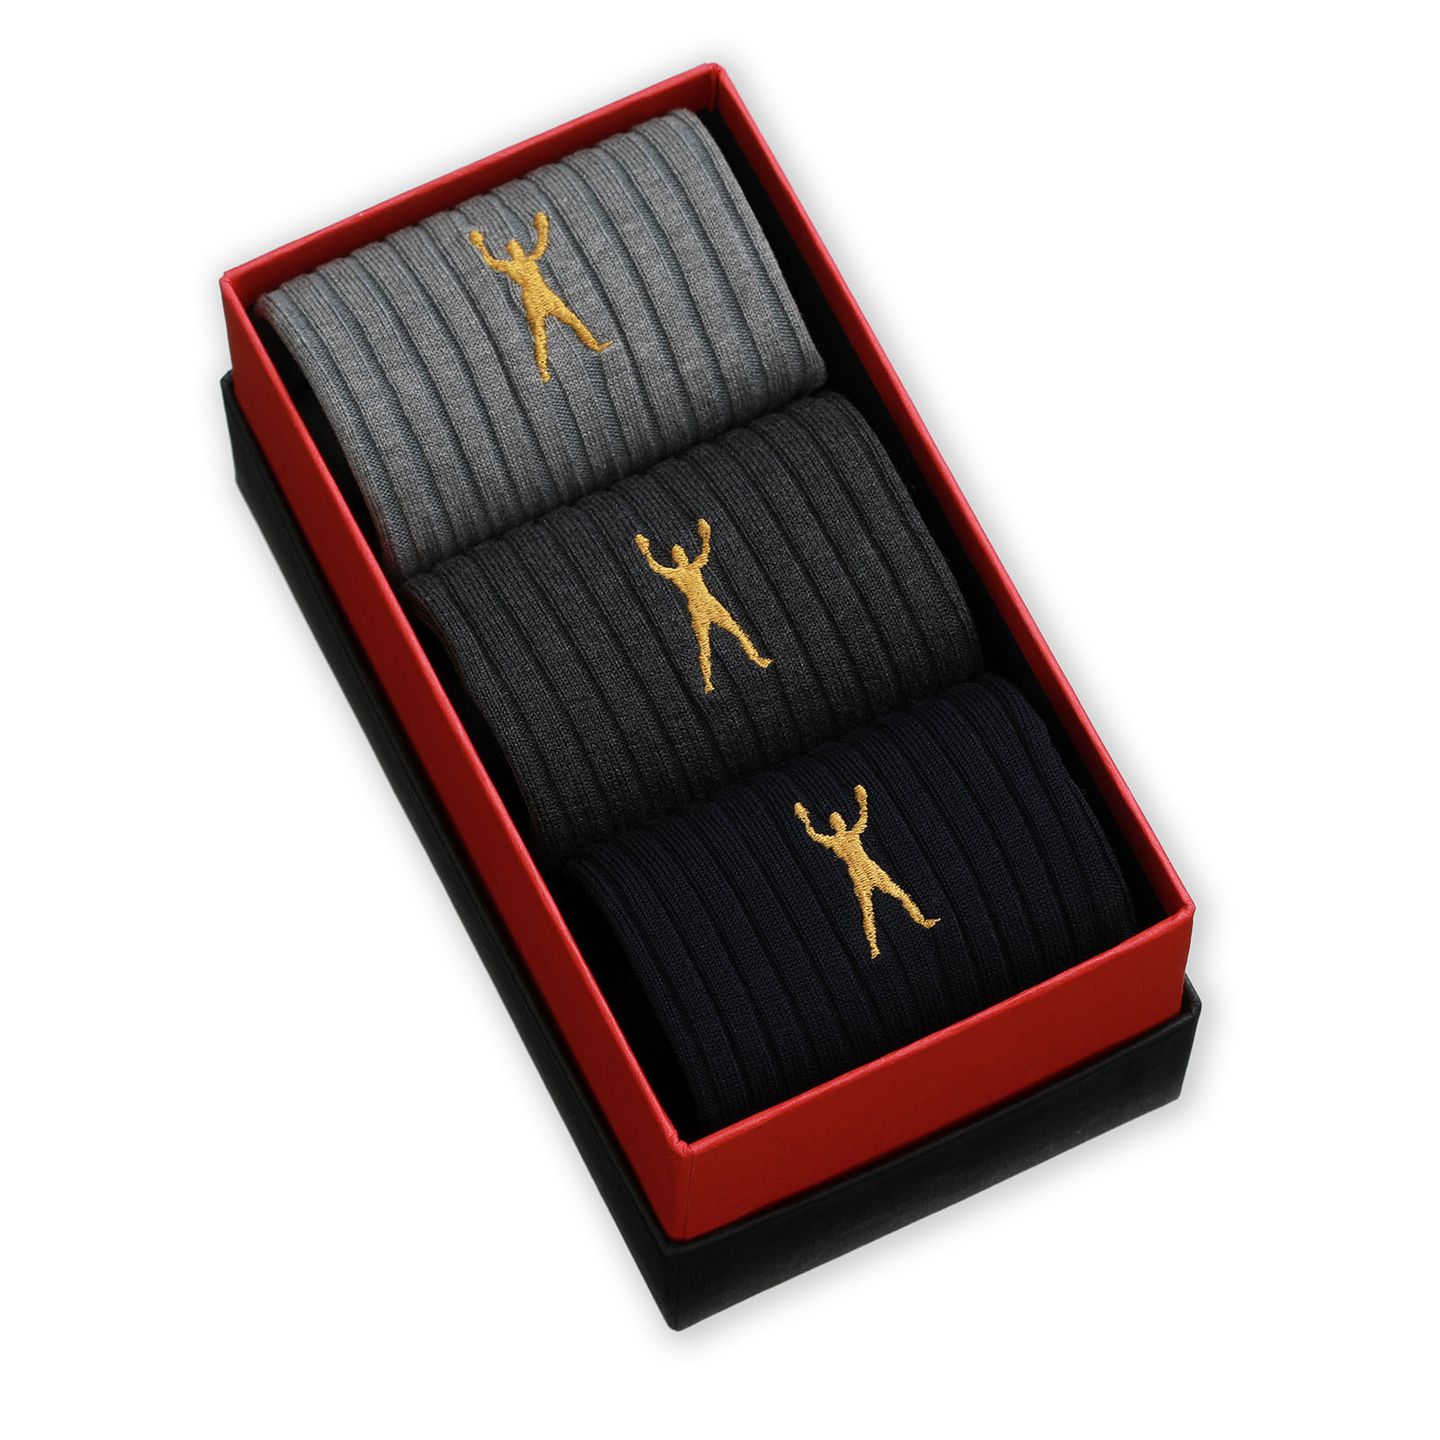 Muhammad Ali 3 pair presentation box with light grey, dark grey and black men's socks